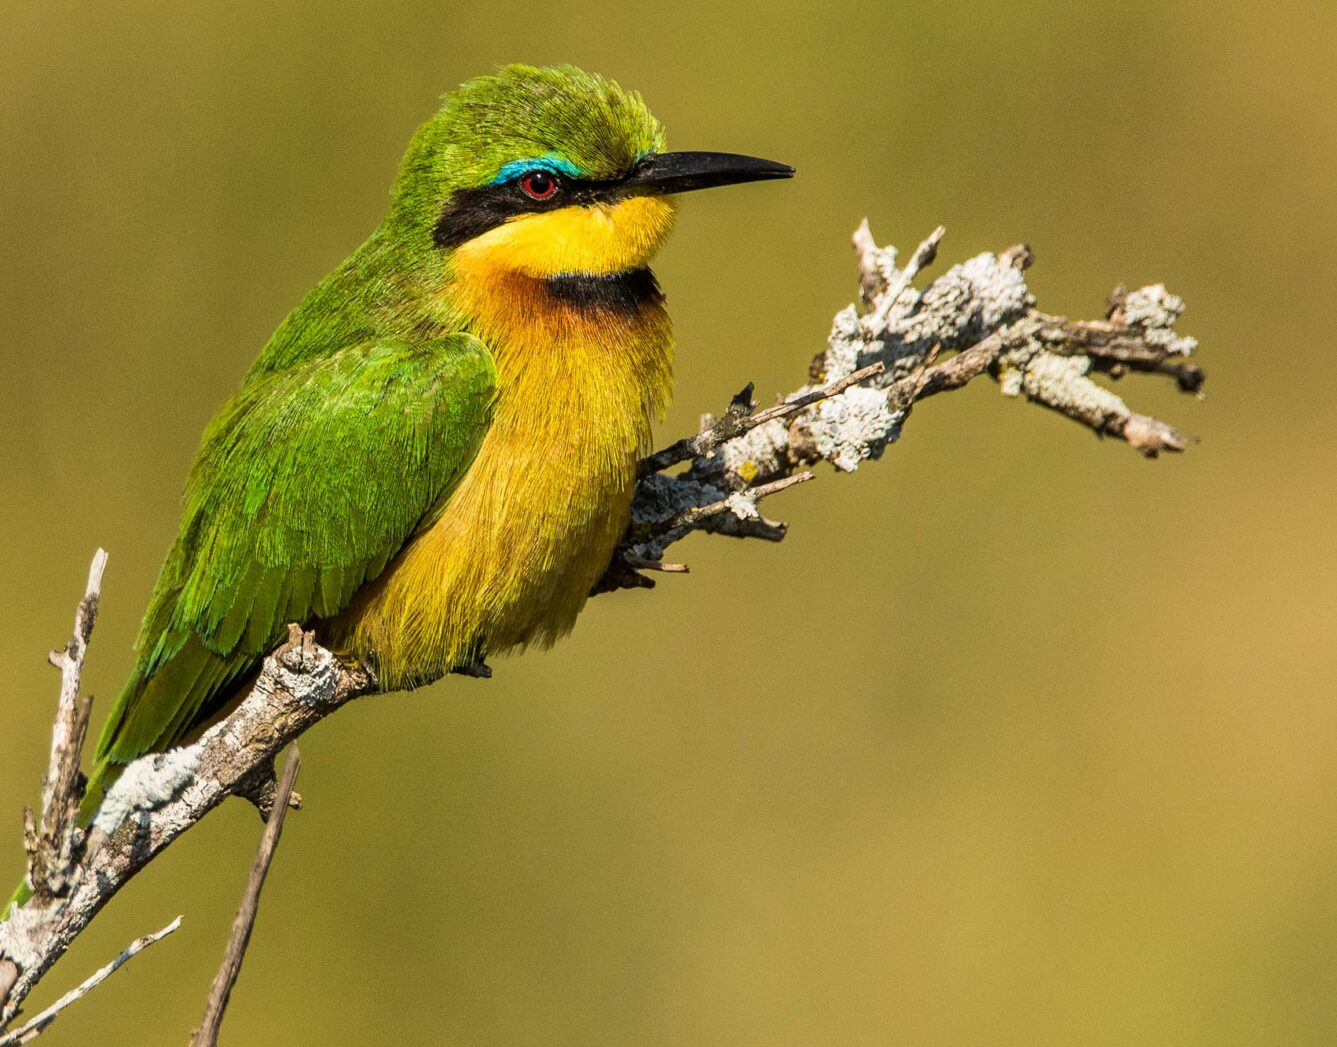 A yellow/green bird sit on a branch